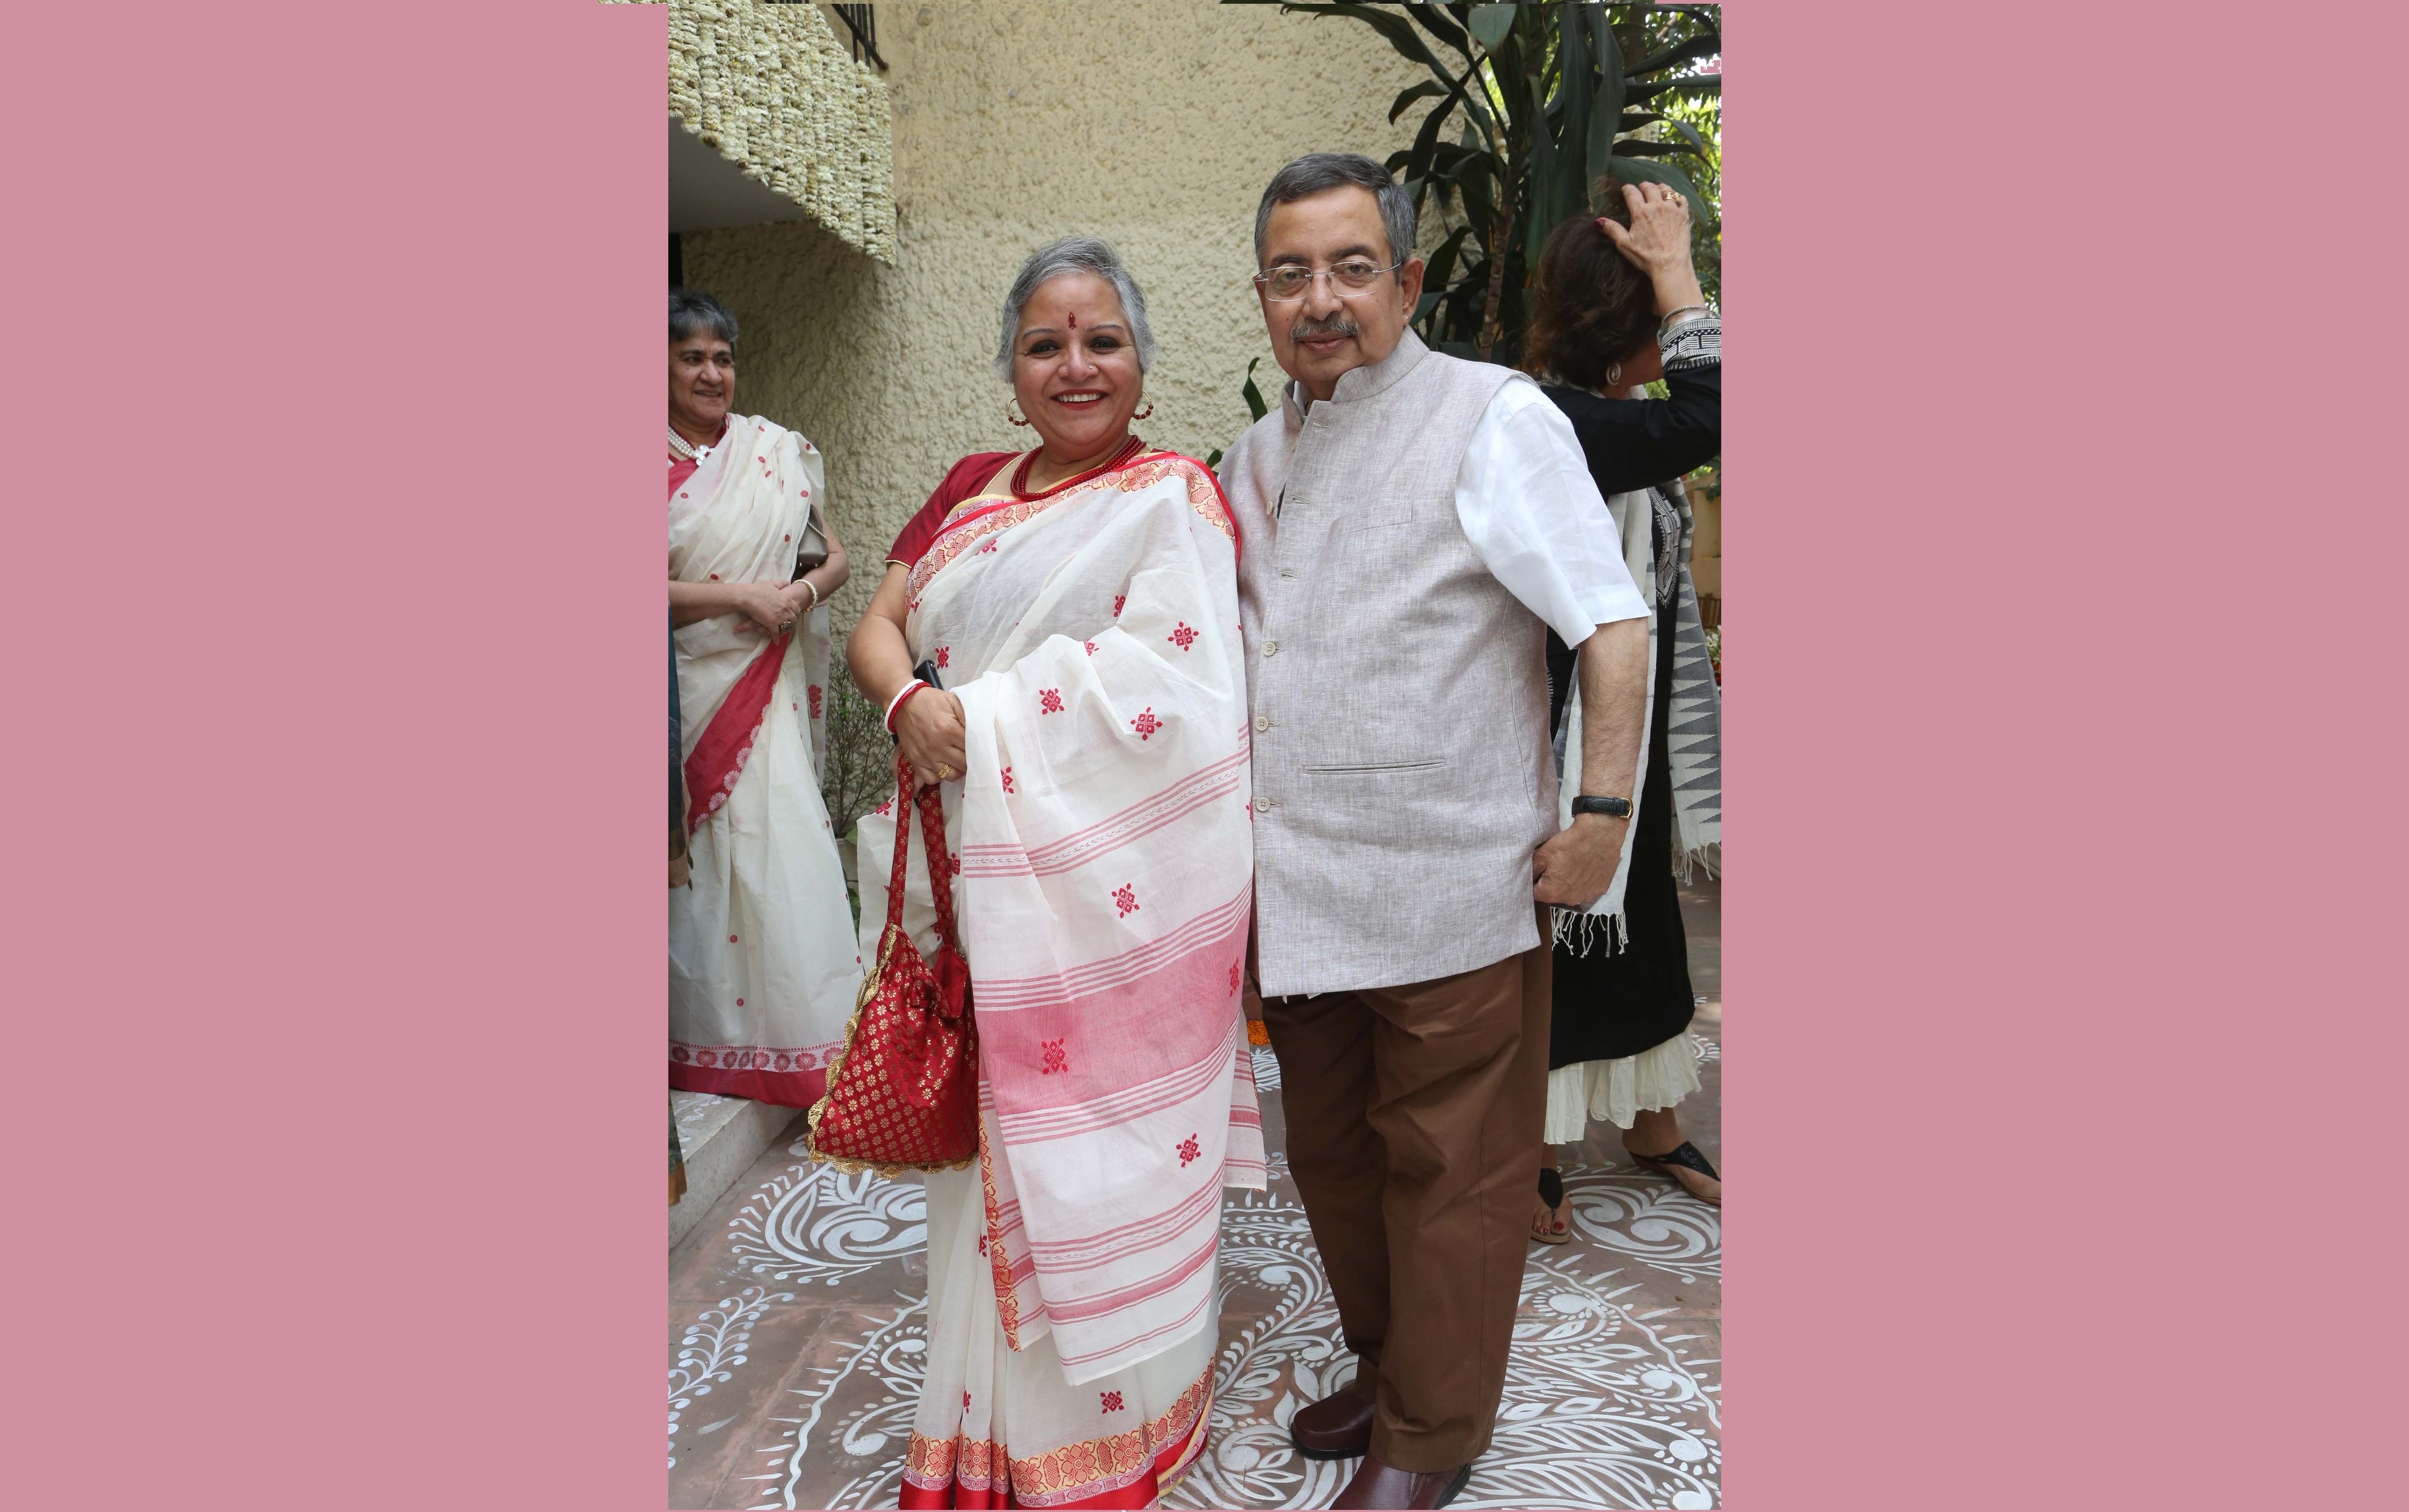 Vinod and Chinna Dua. (Prabhas Roy/HT Archive)